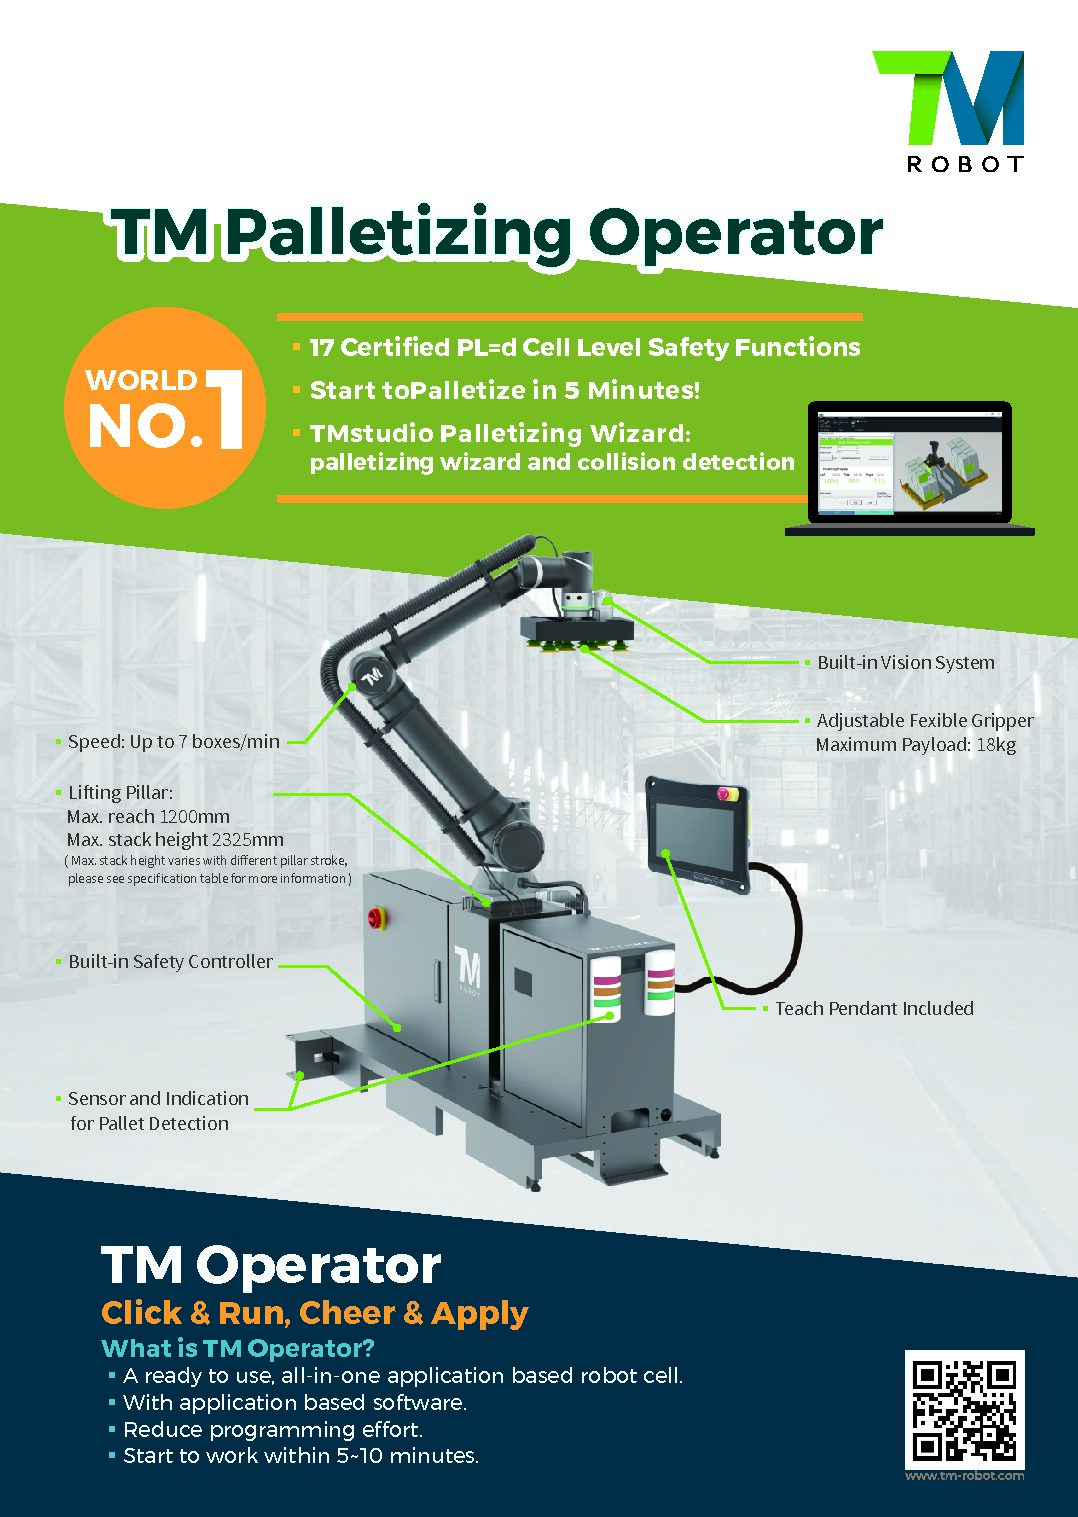 TM Palletizing Operator